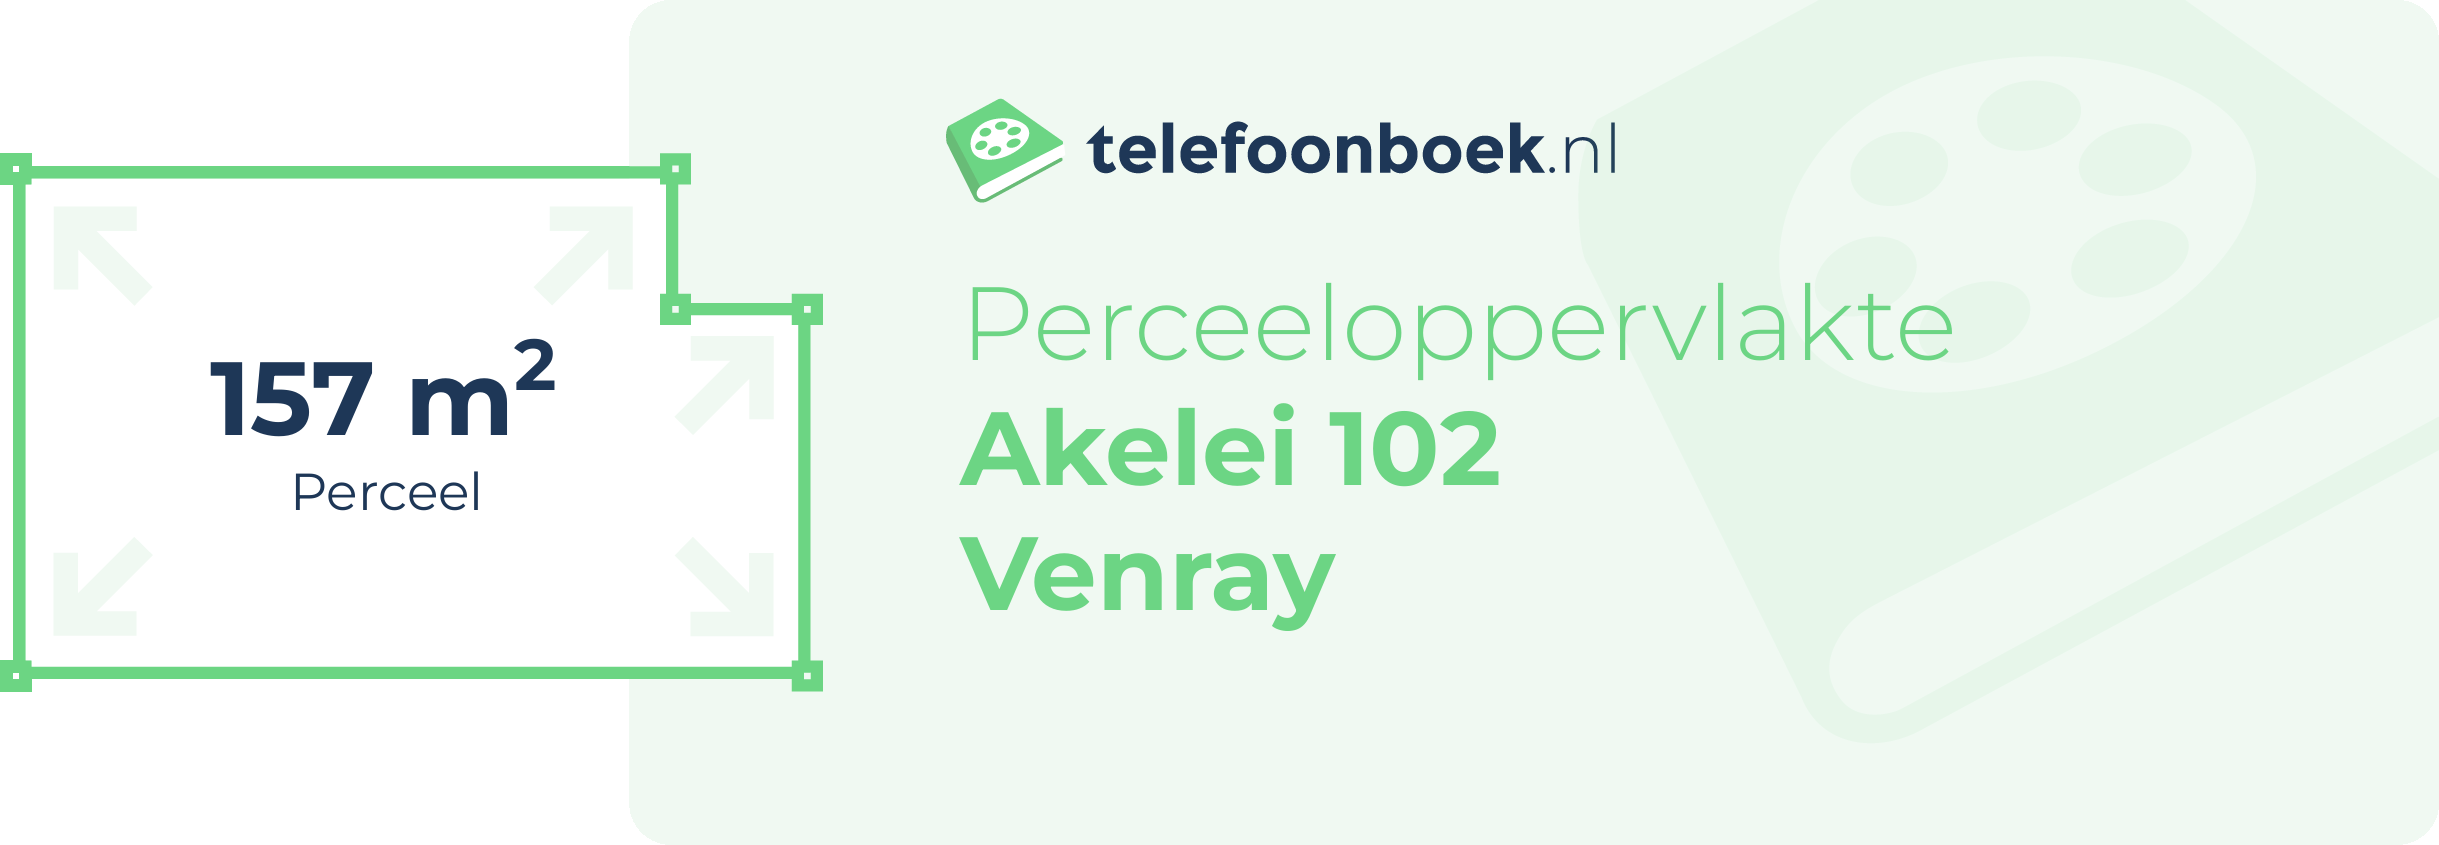 Perceeloppervlakte Akelei 102 Venray